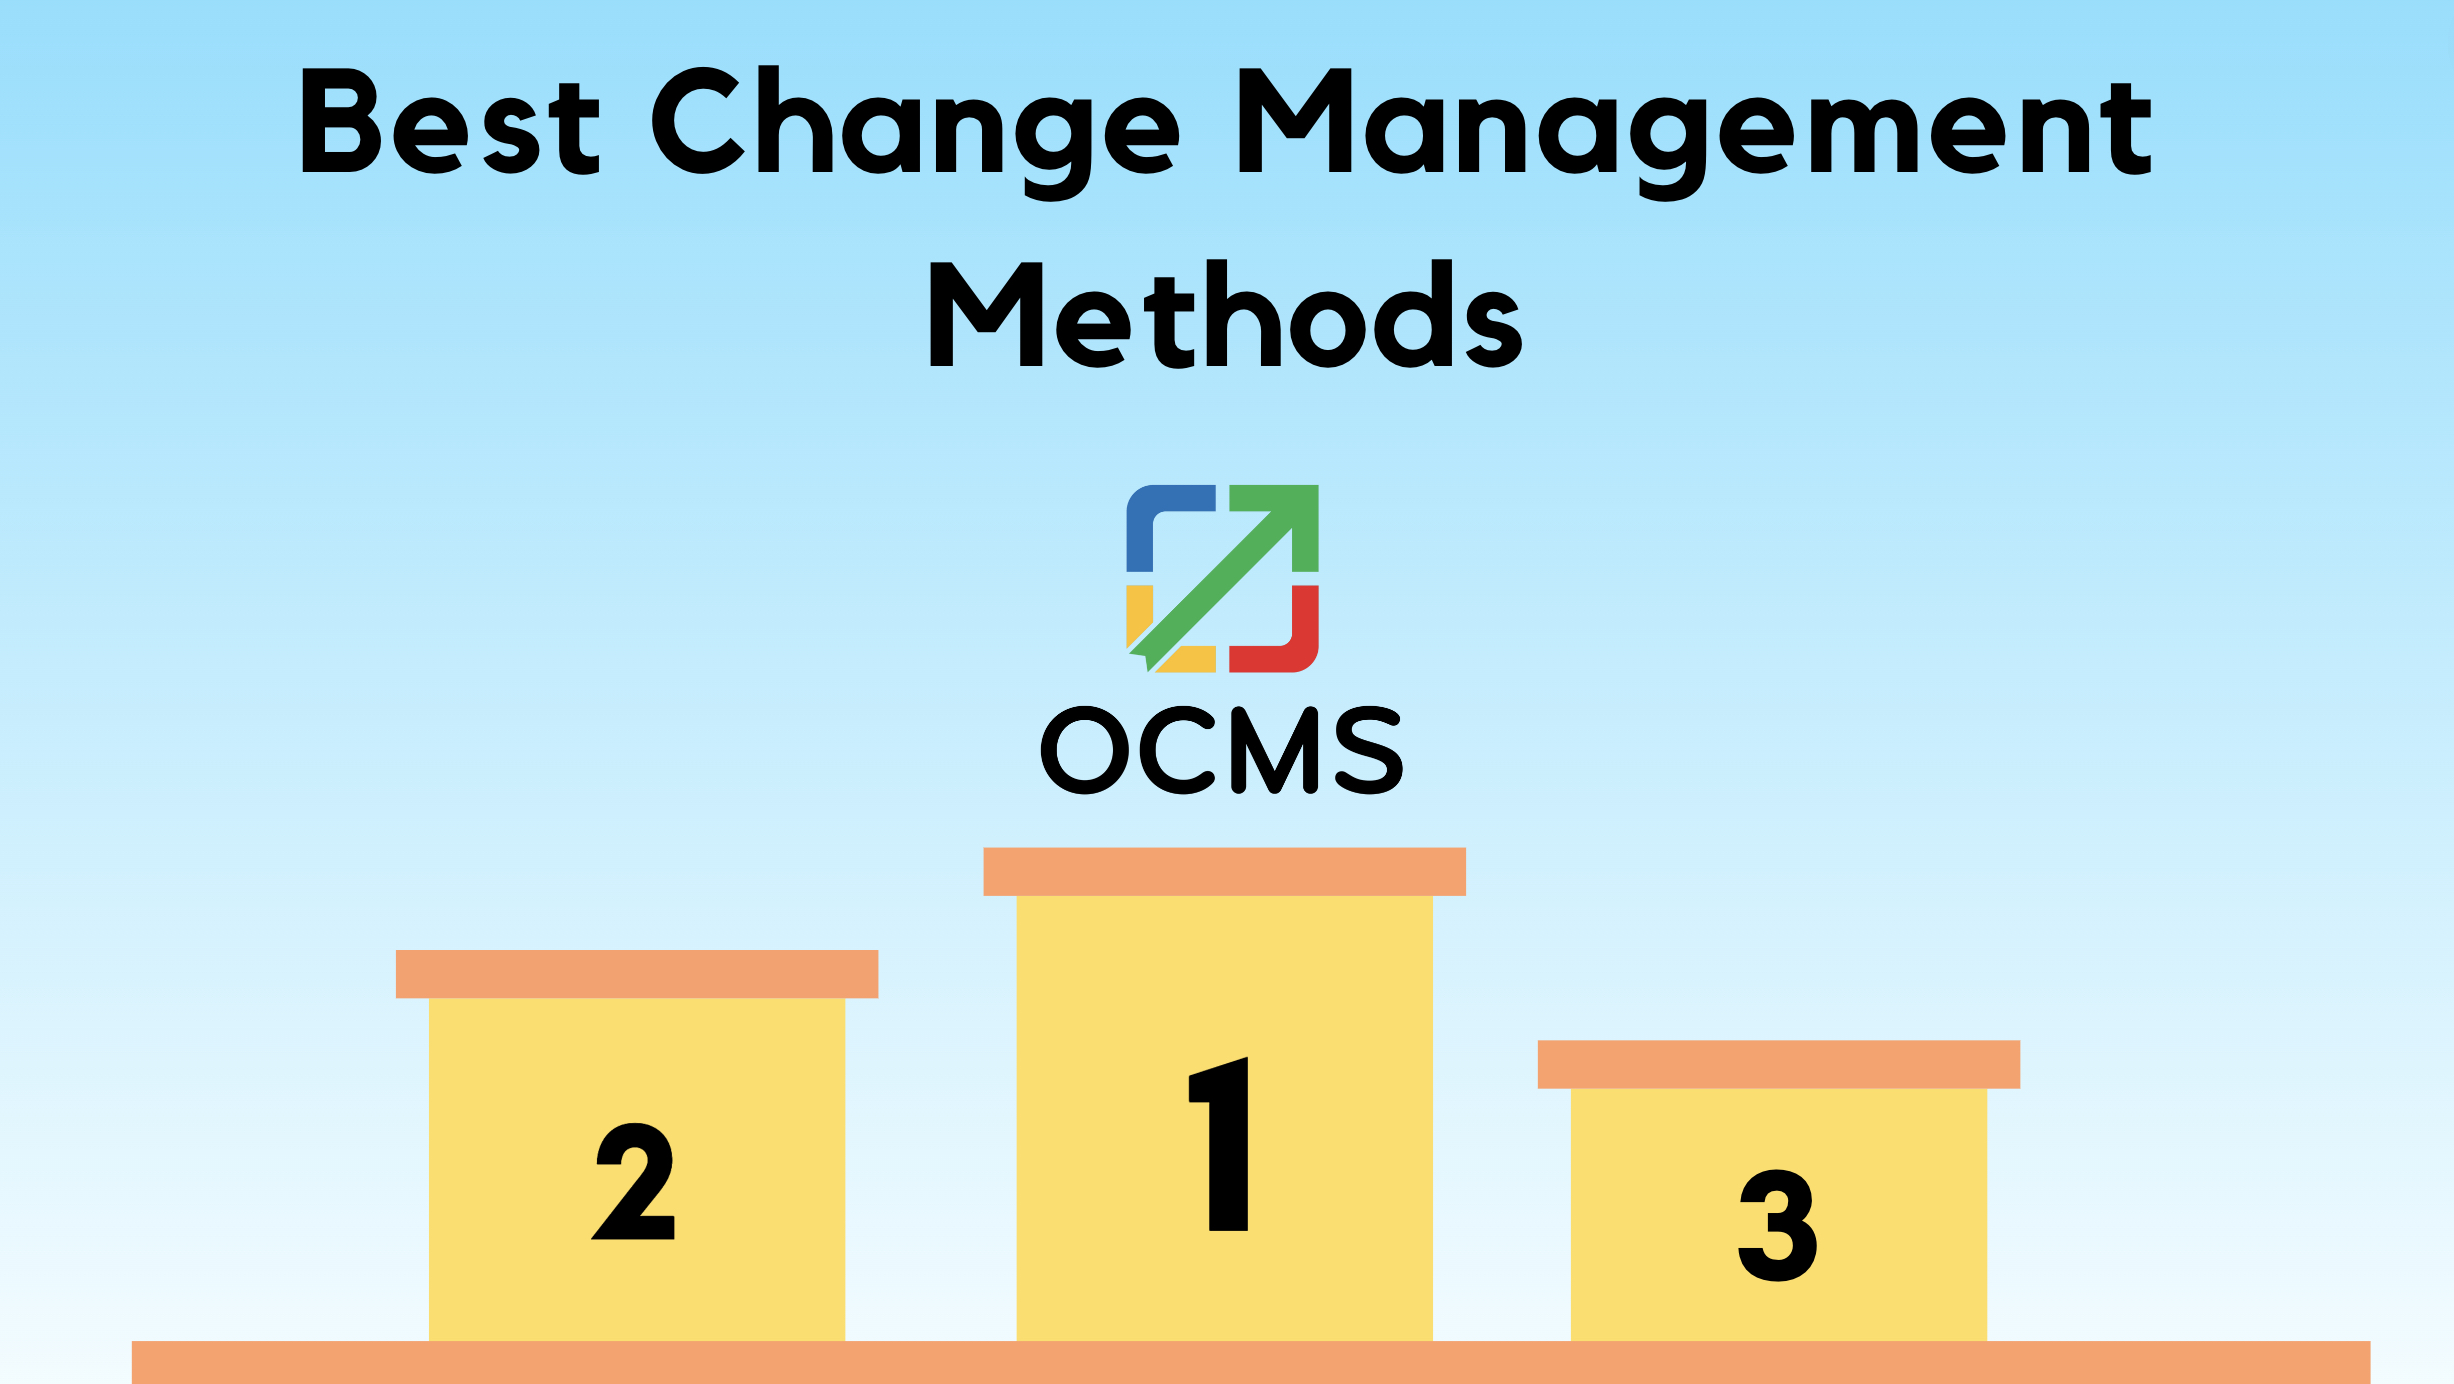 change management methodology